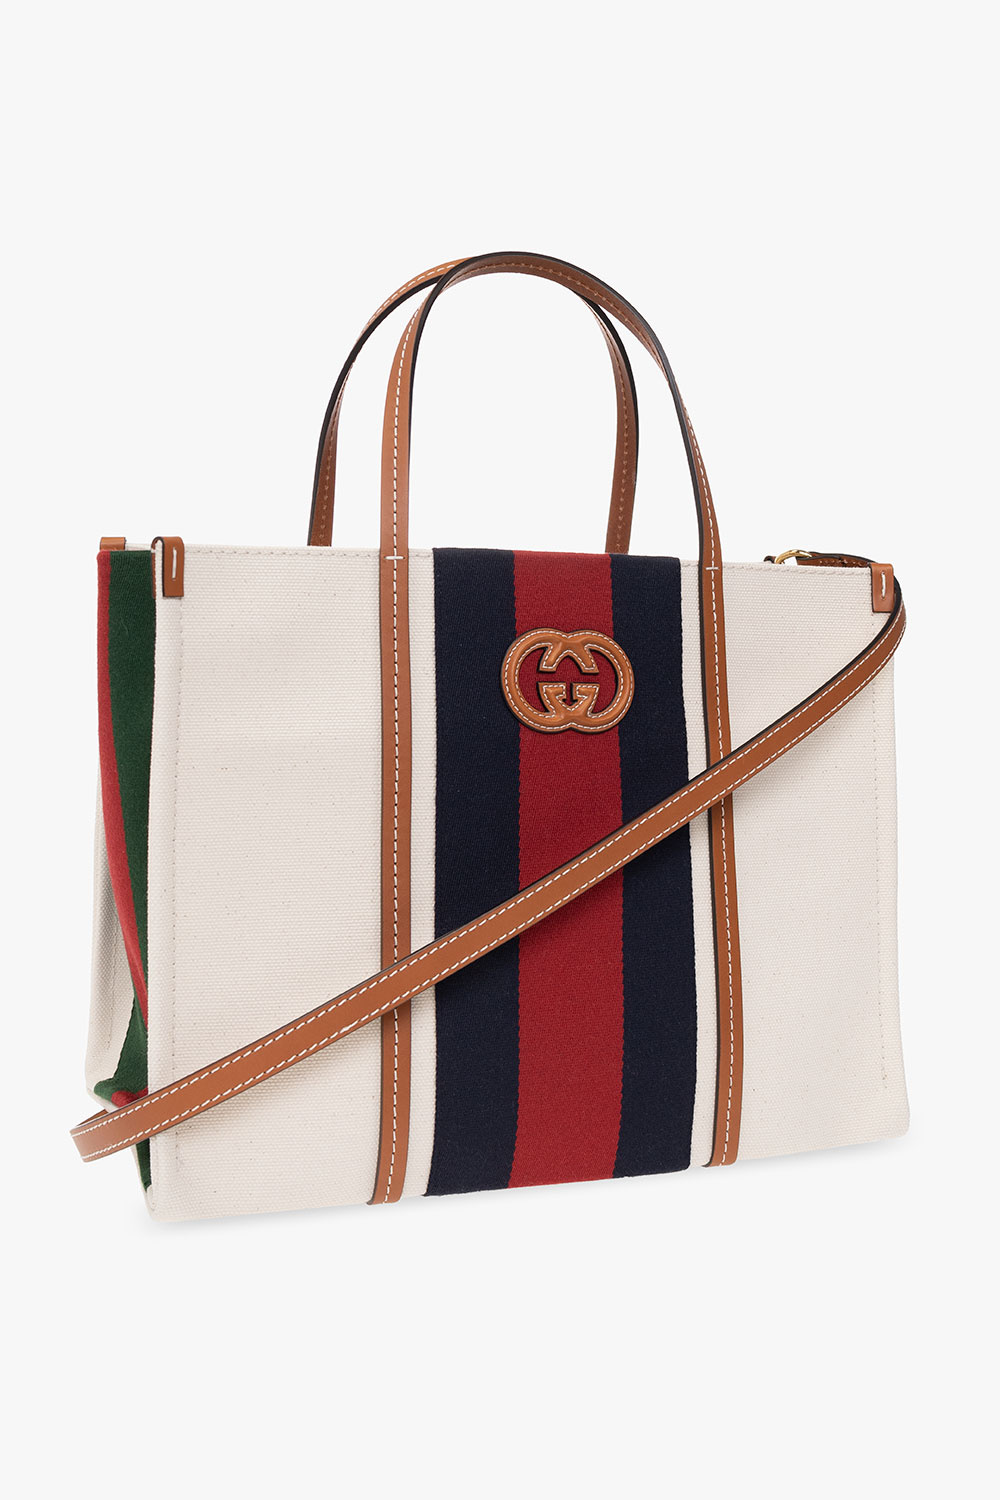 Gucci Shopper bag with logo